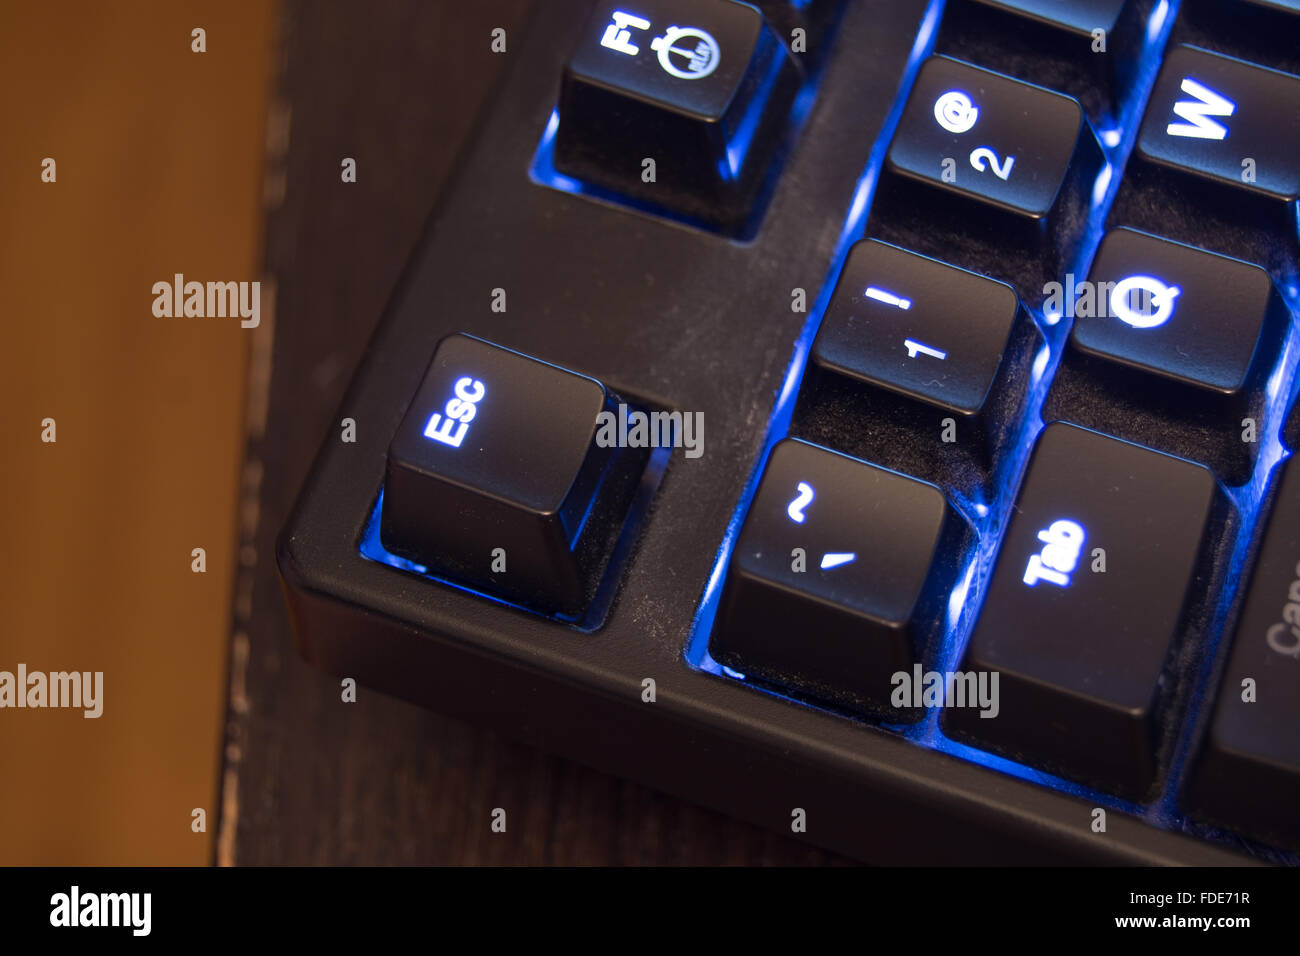 A Ducky Shine 3 mechanical keyboard's escape key. Stock Photo